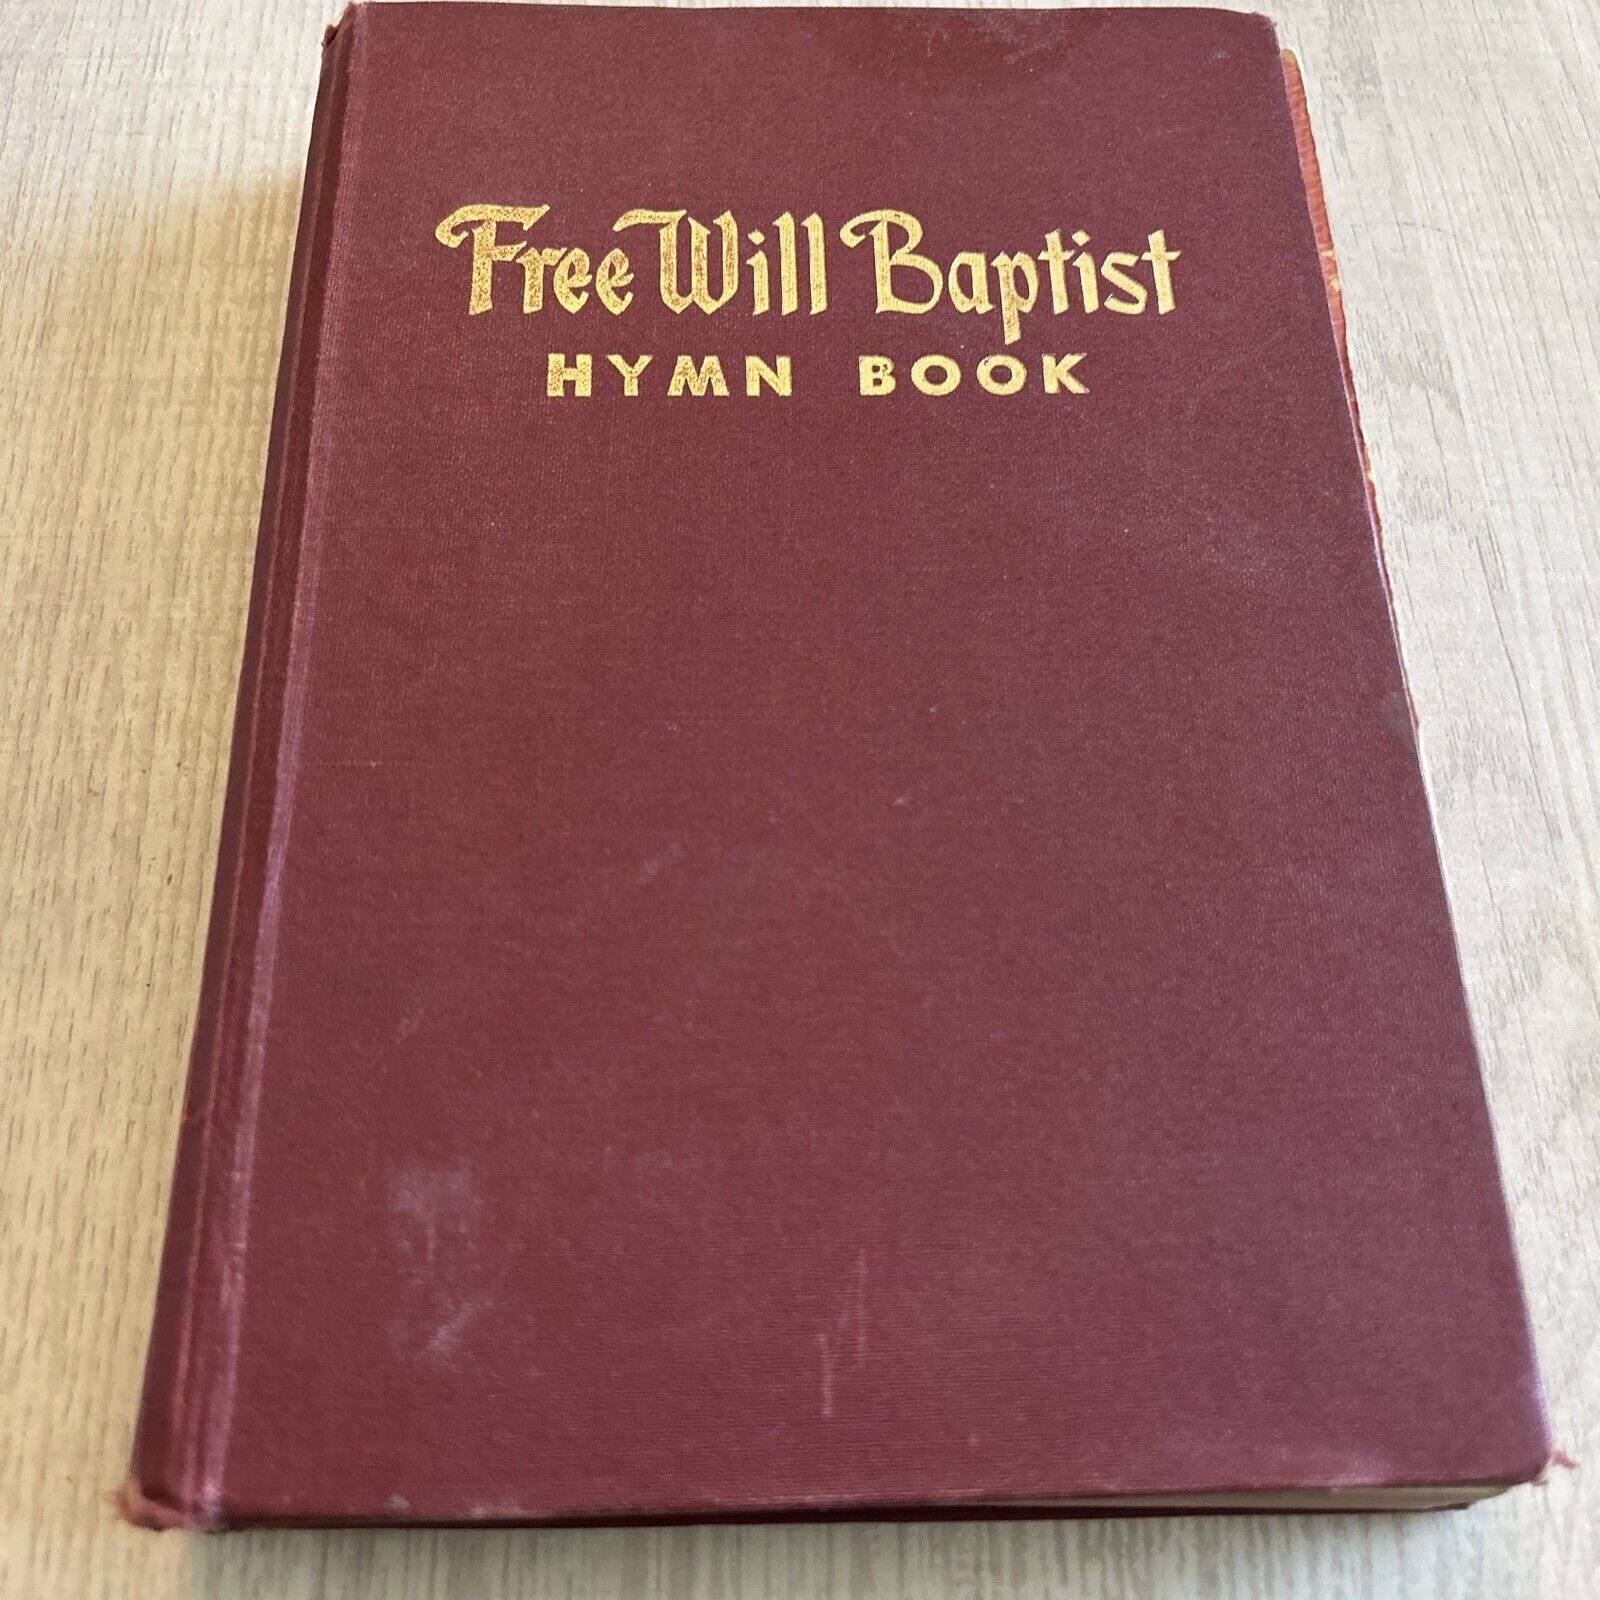 Free Will Baptist Hymn Book - 1964